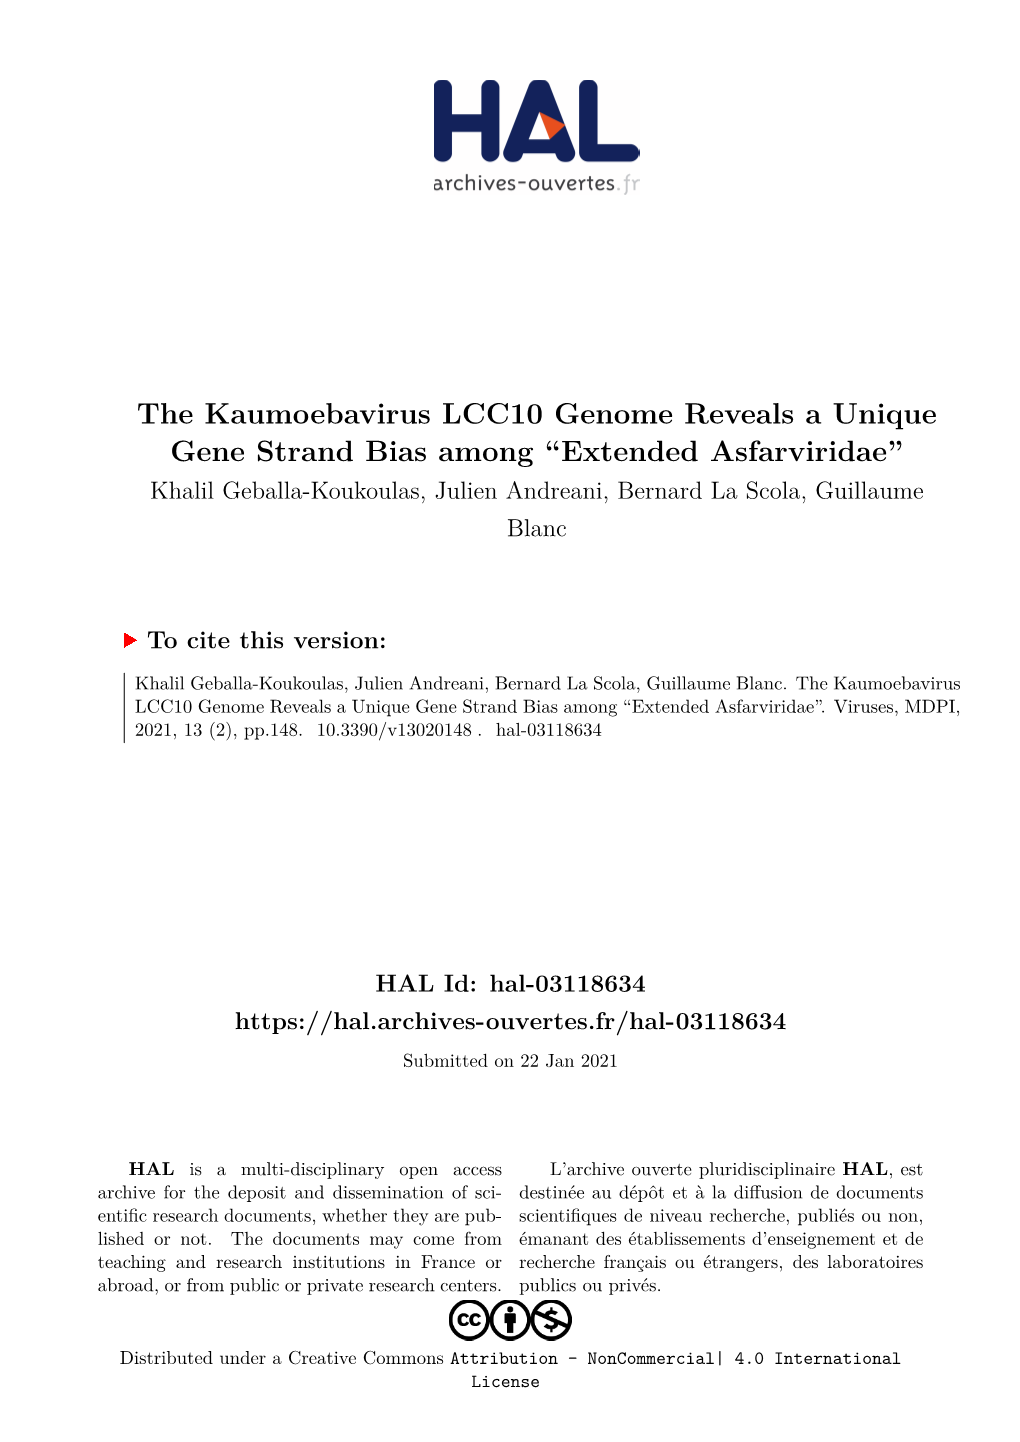 The Kaumoebavirus LCC10 Genome Reveals a Unique Gene Strand